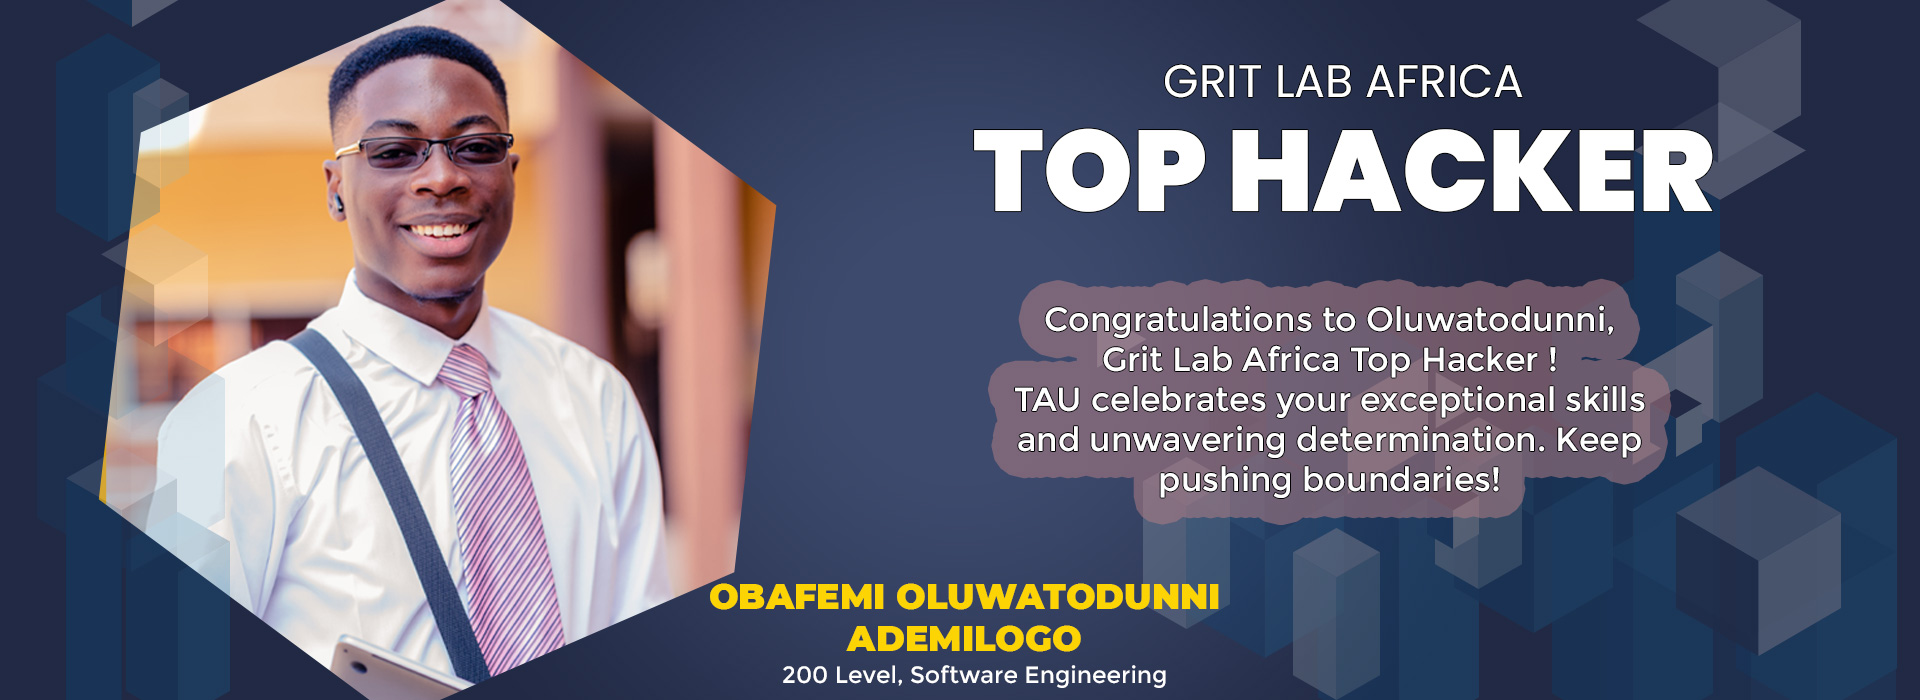 Grit Lab Africa Top Hacker